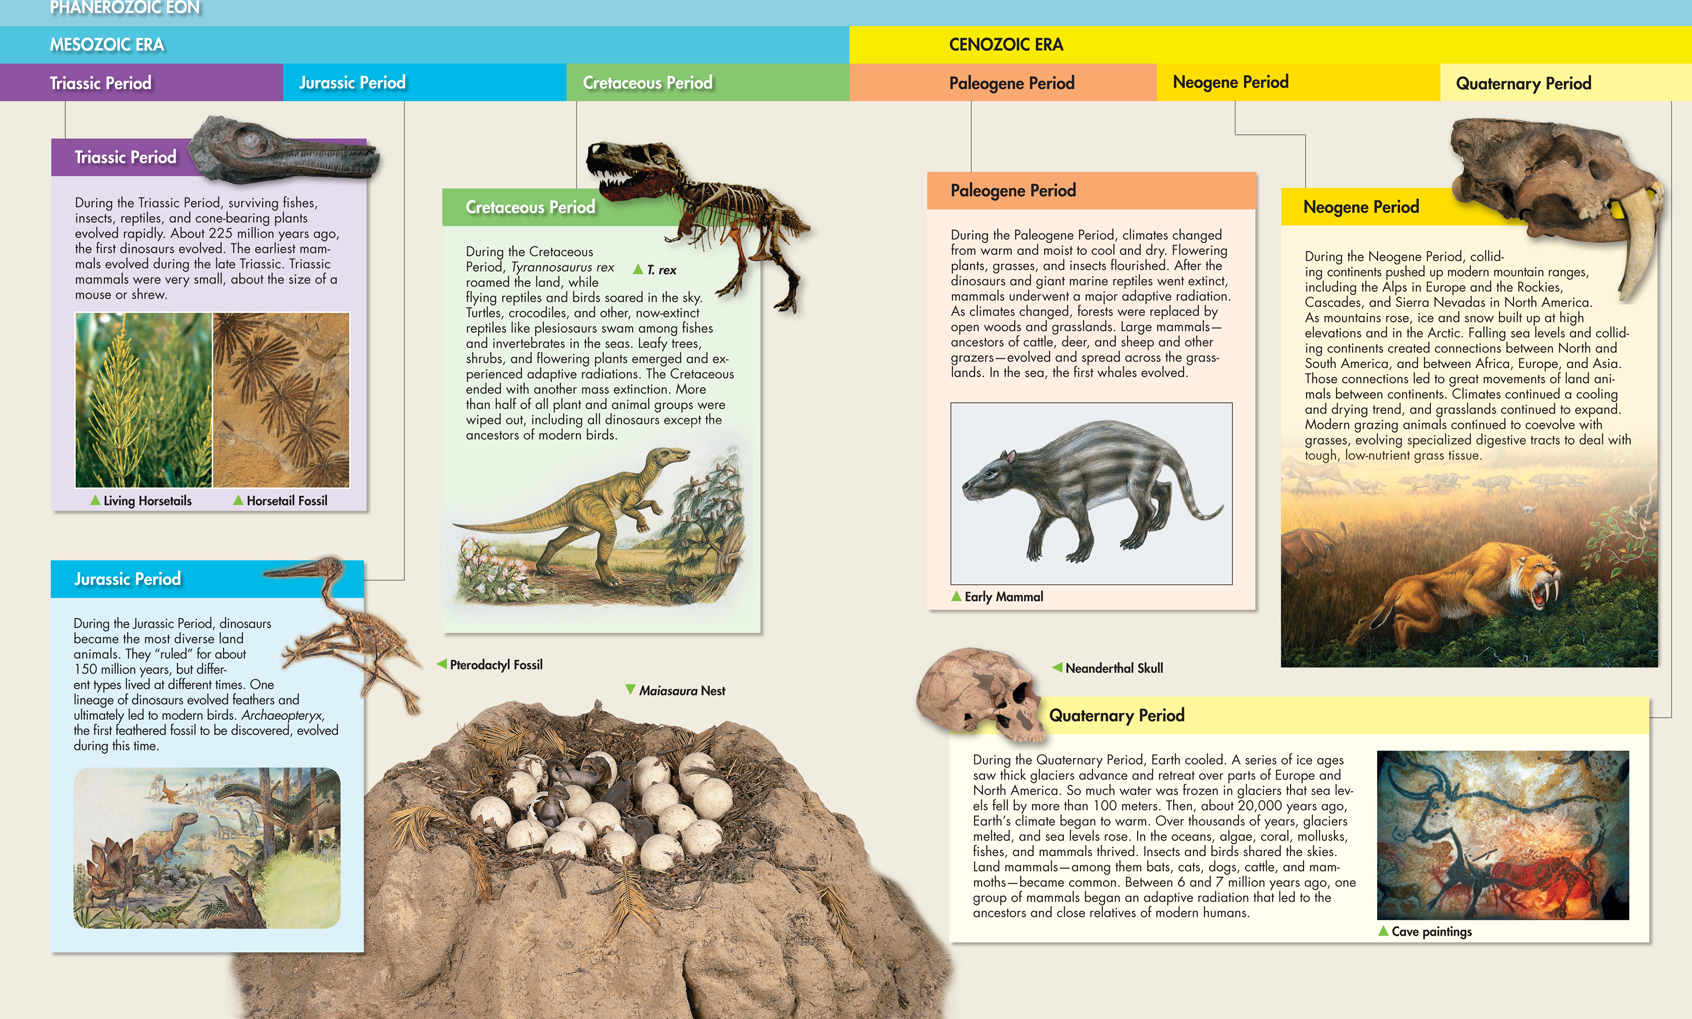 Classification of Mesozoic Era into Mesozoic Era and Cenozoic Era